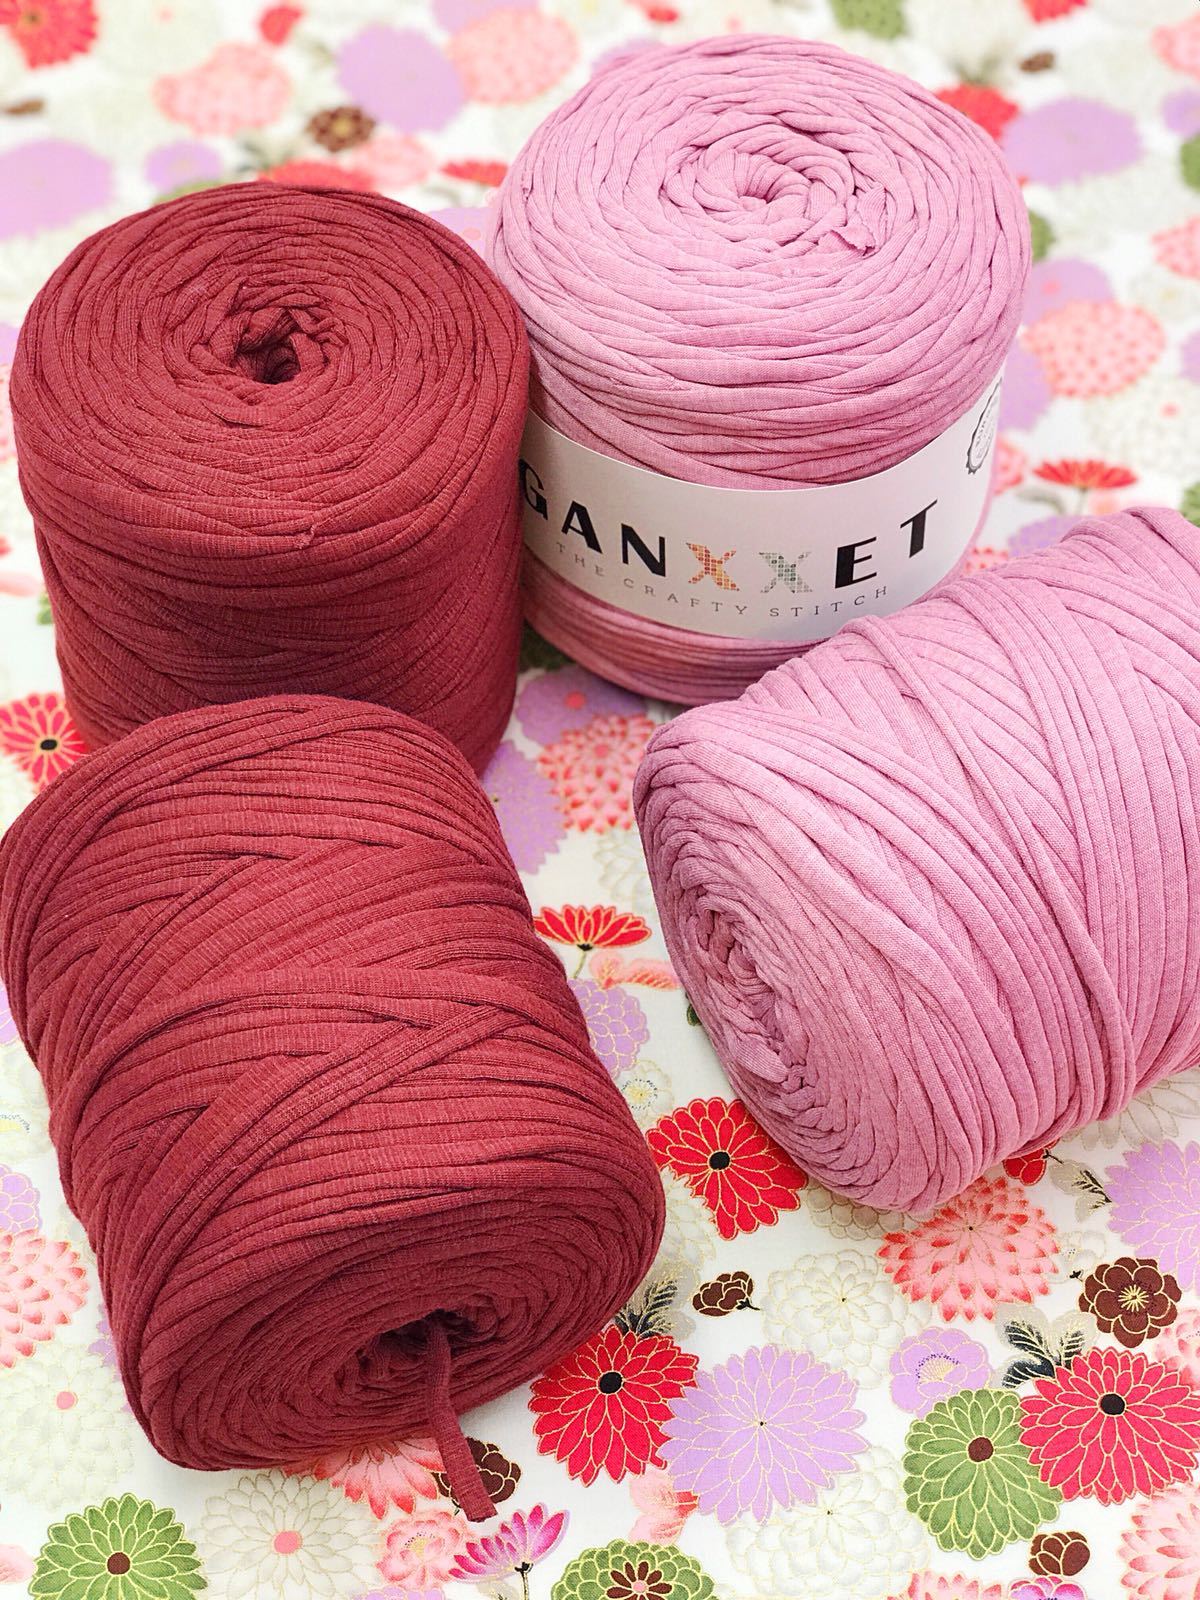 Fabric Yarn T-shirt Yarn Jersey Yarn for crocheters and knitters